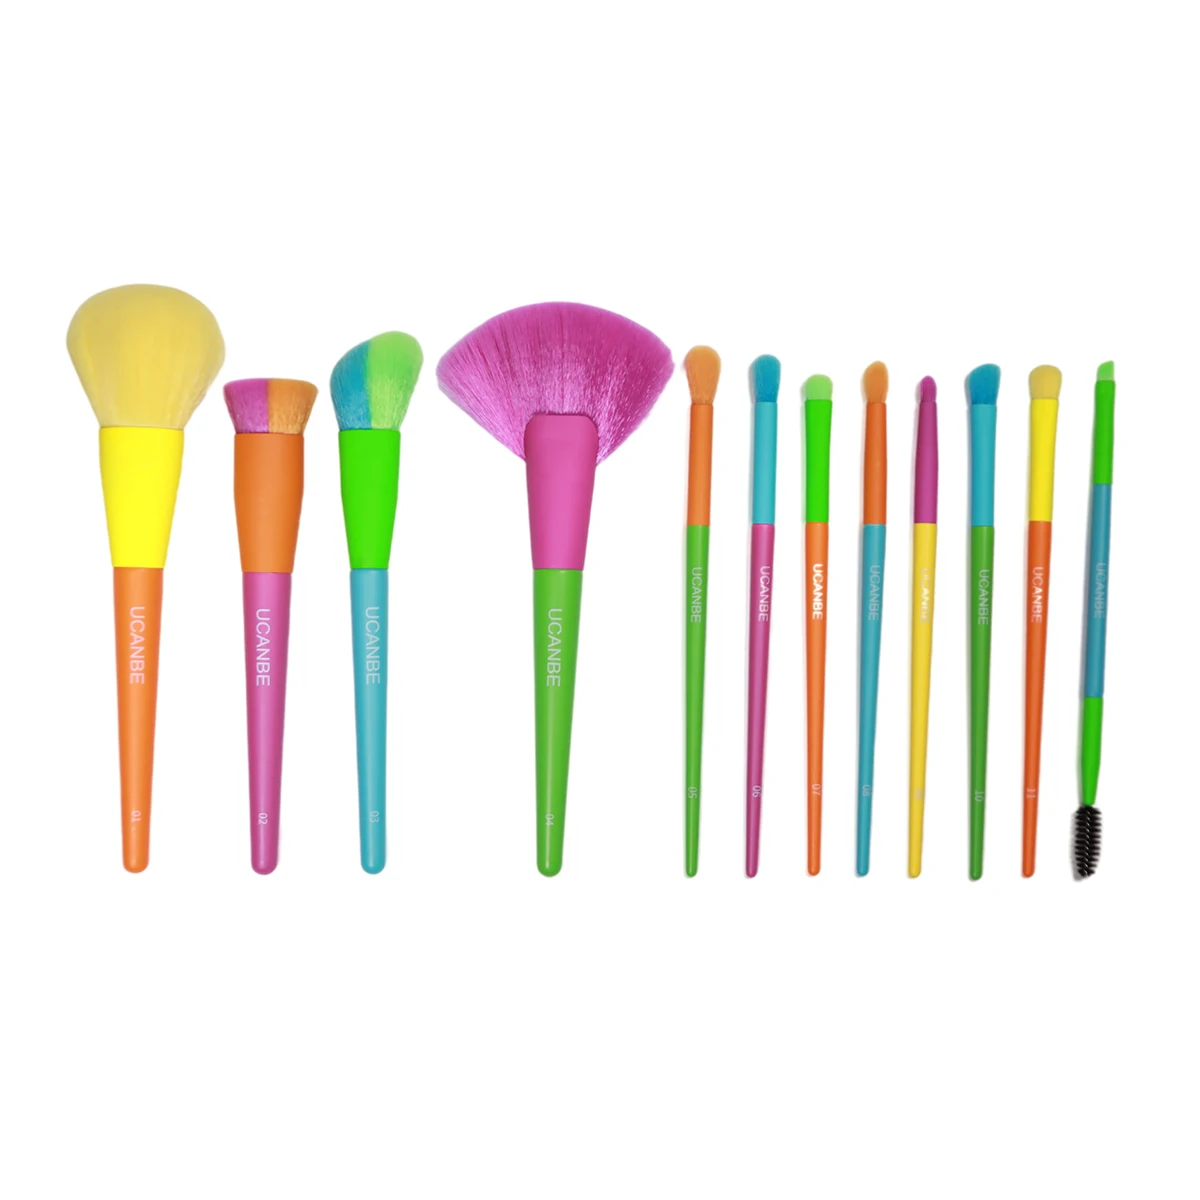 

Wholesale Docolor Makeup Brushes 12 Pcs Colourful Vegan Makeup Brush Set For Rainbow Make Up Brush Set